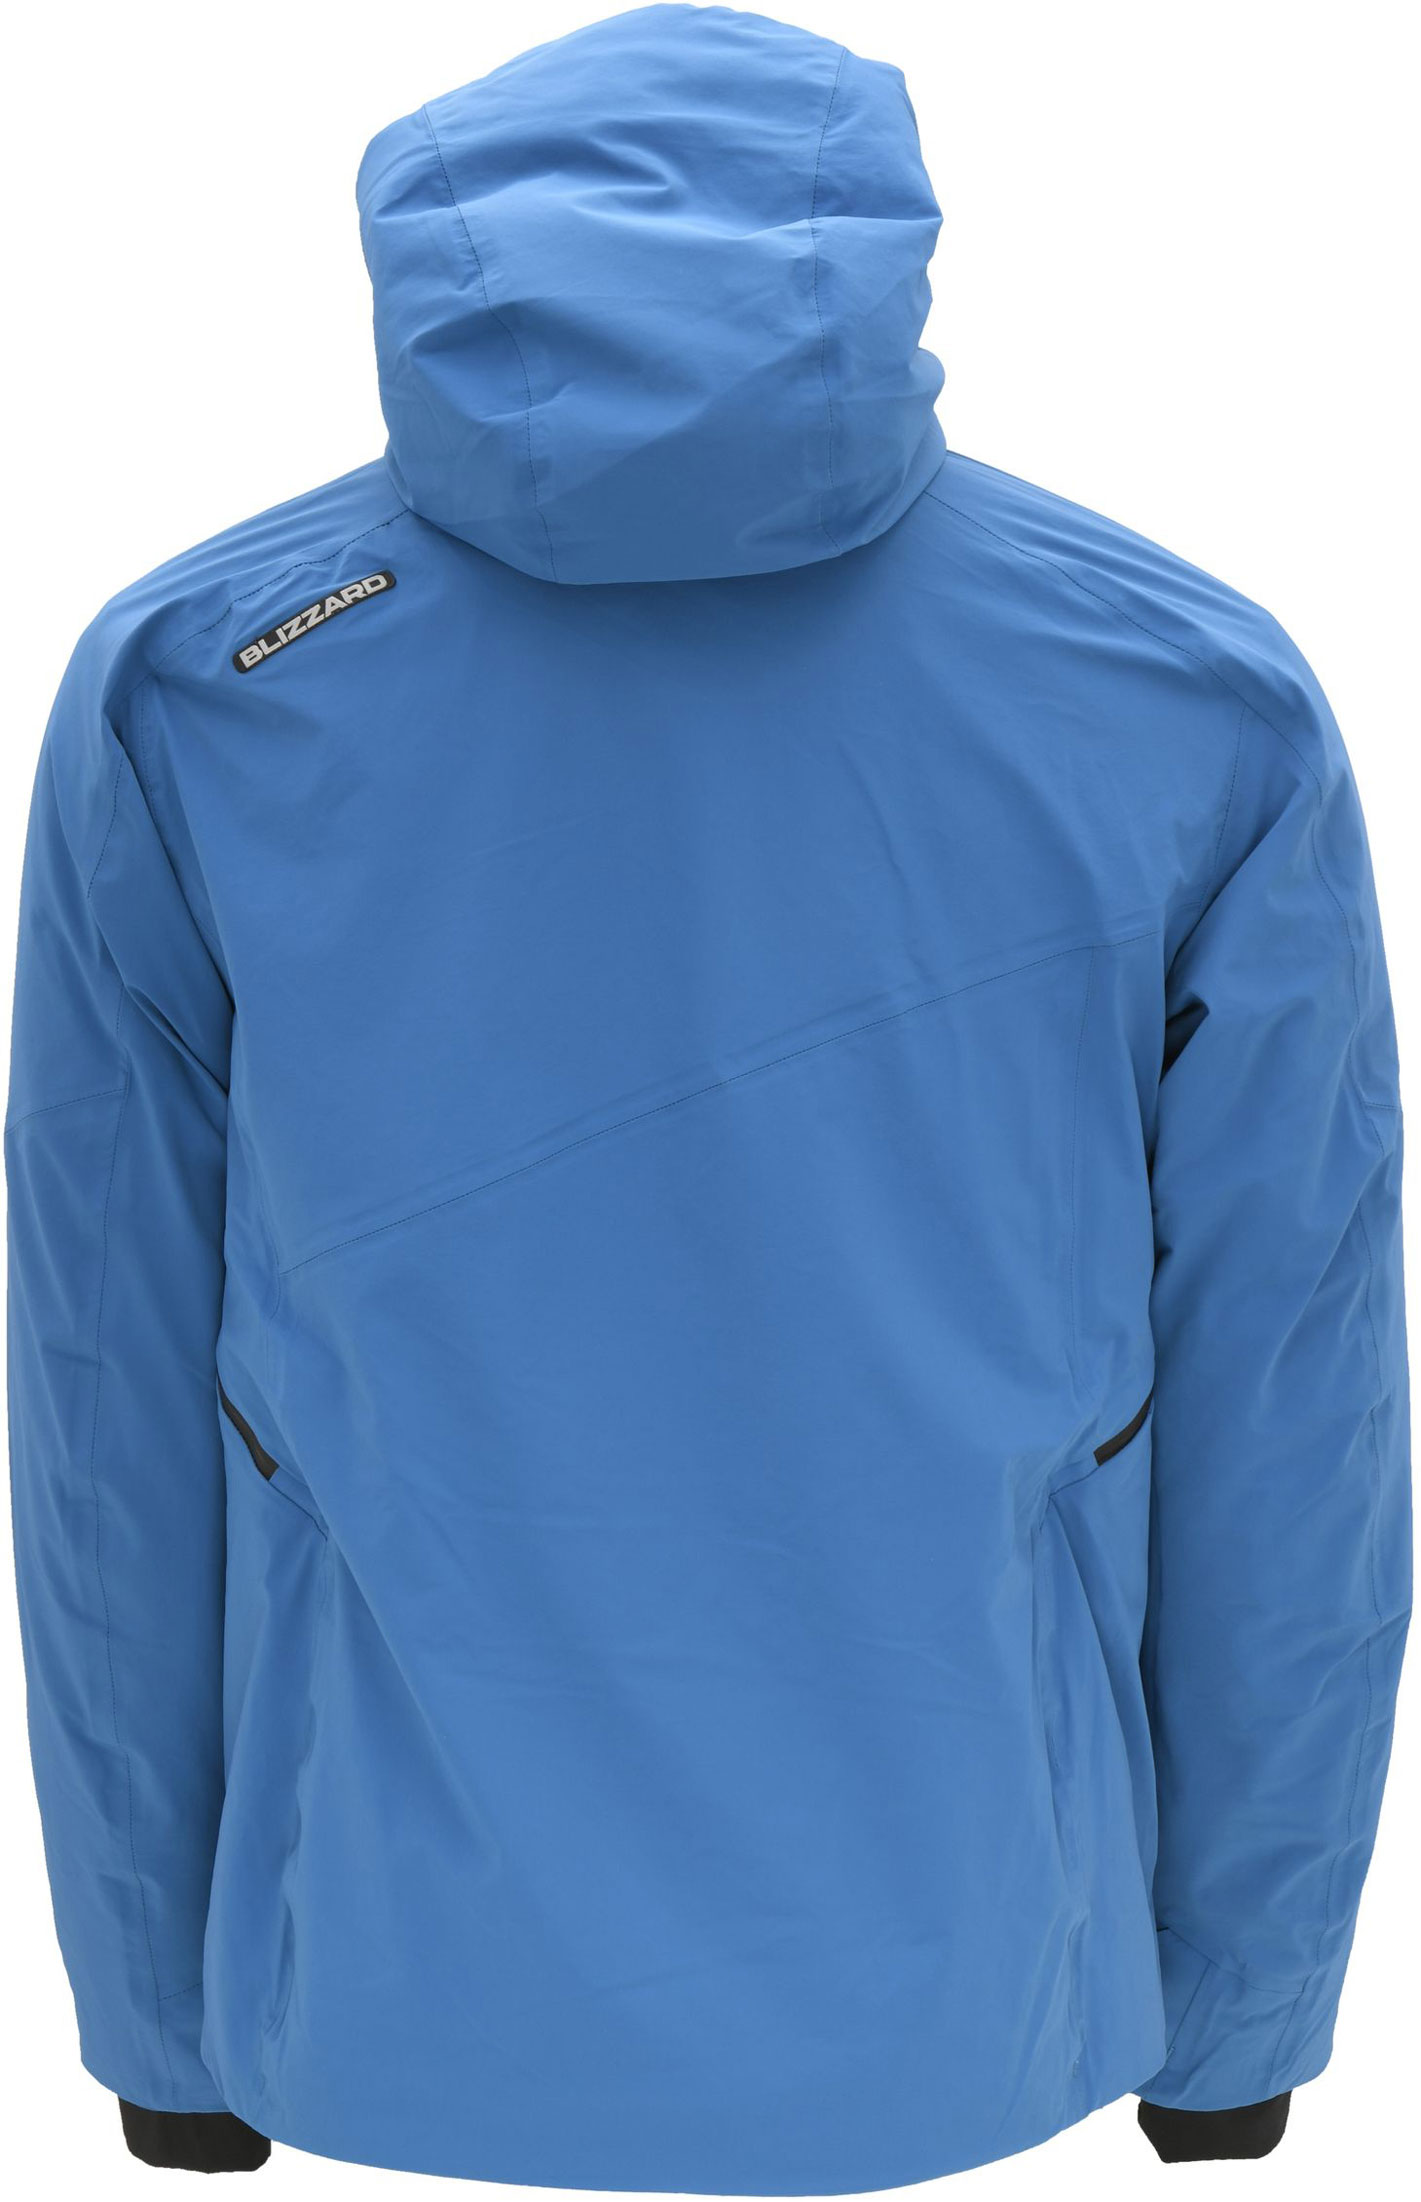 Куртка горнолыжная Blizzard Ski Jacket Silvretta Petroleum, размер L - фото 4